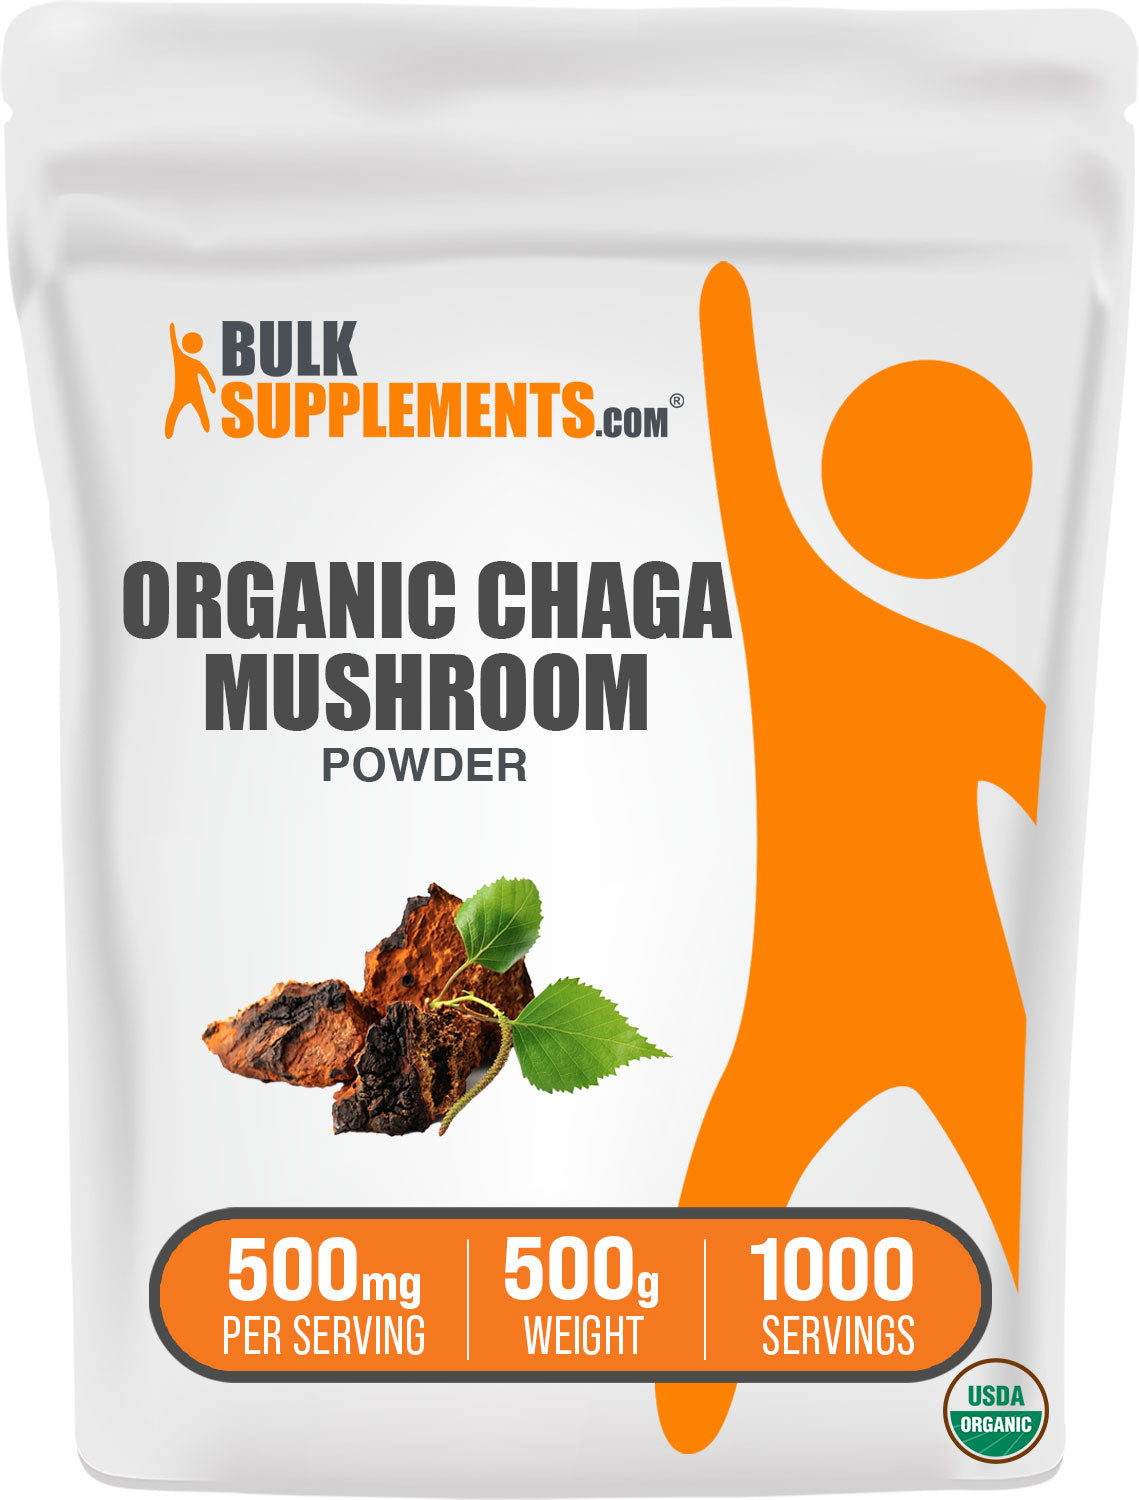 BulkSupplements.com Organic Chaga Mushroom Powder 500g Bag